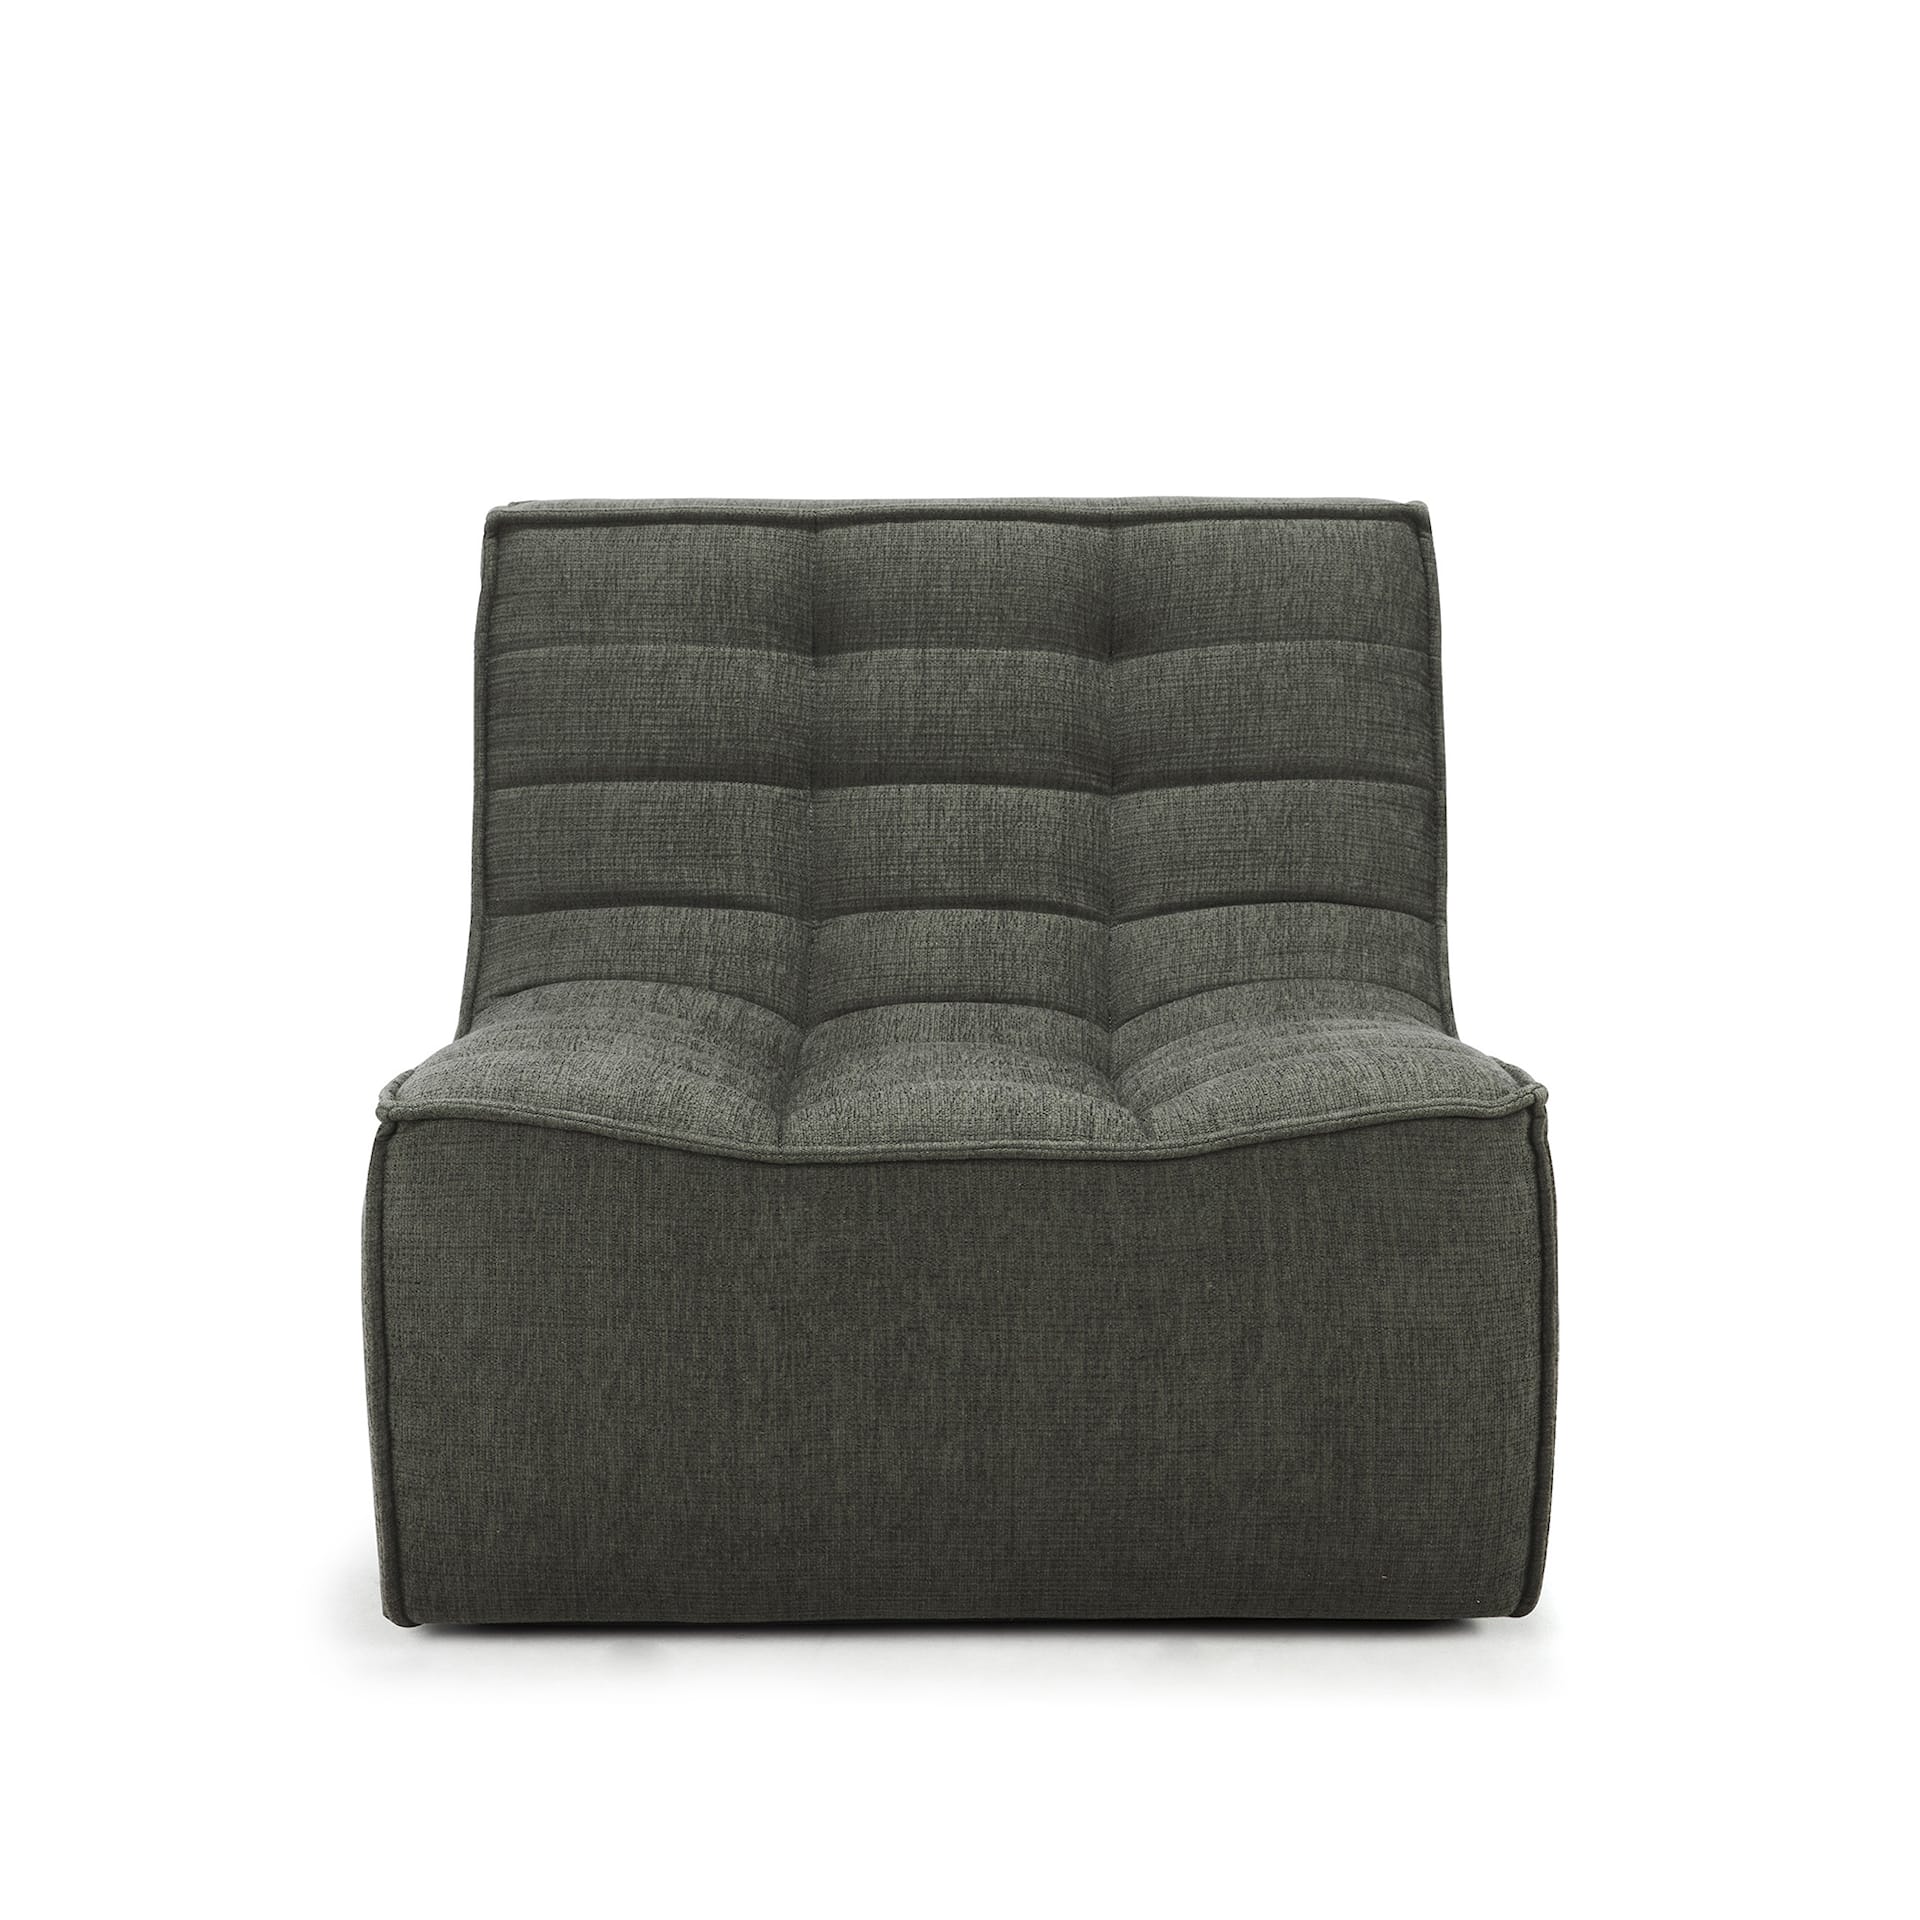 N701 Sofa 1-Seater - Ethnicraft - NO GA